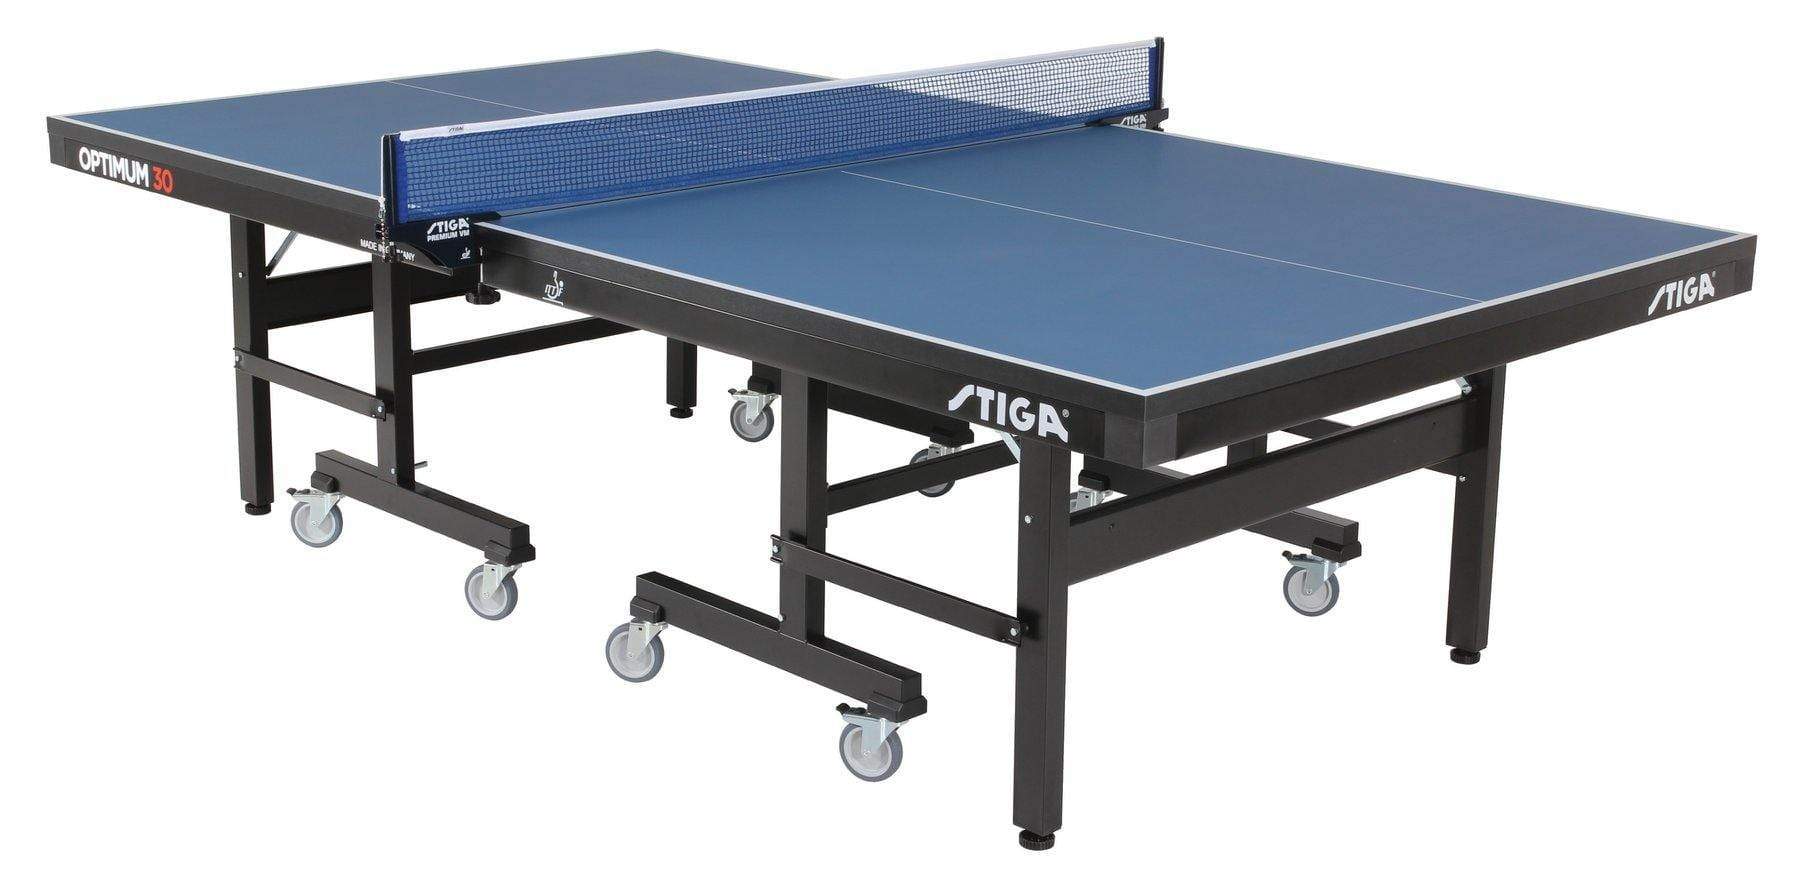 Stiga Table Tennis STIGA - Optimum 30 Table Tennis Table - T8508